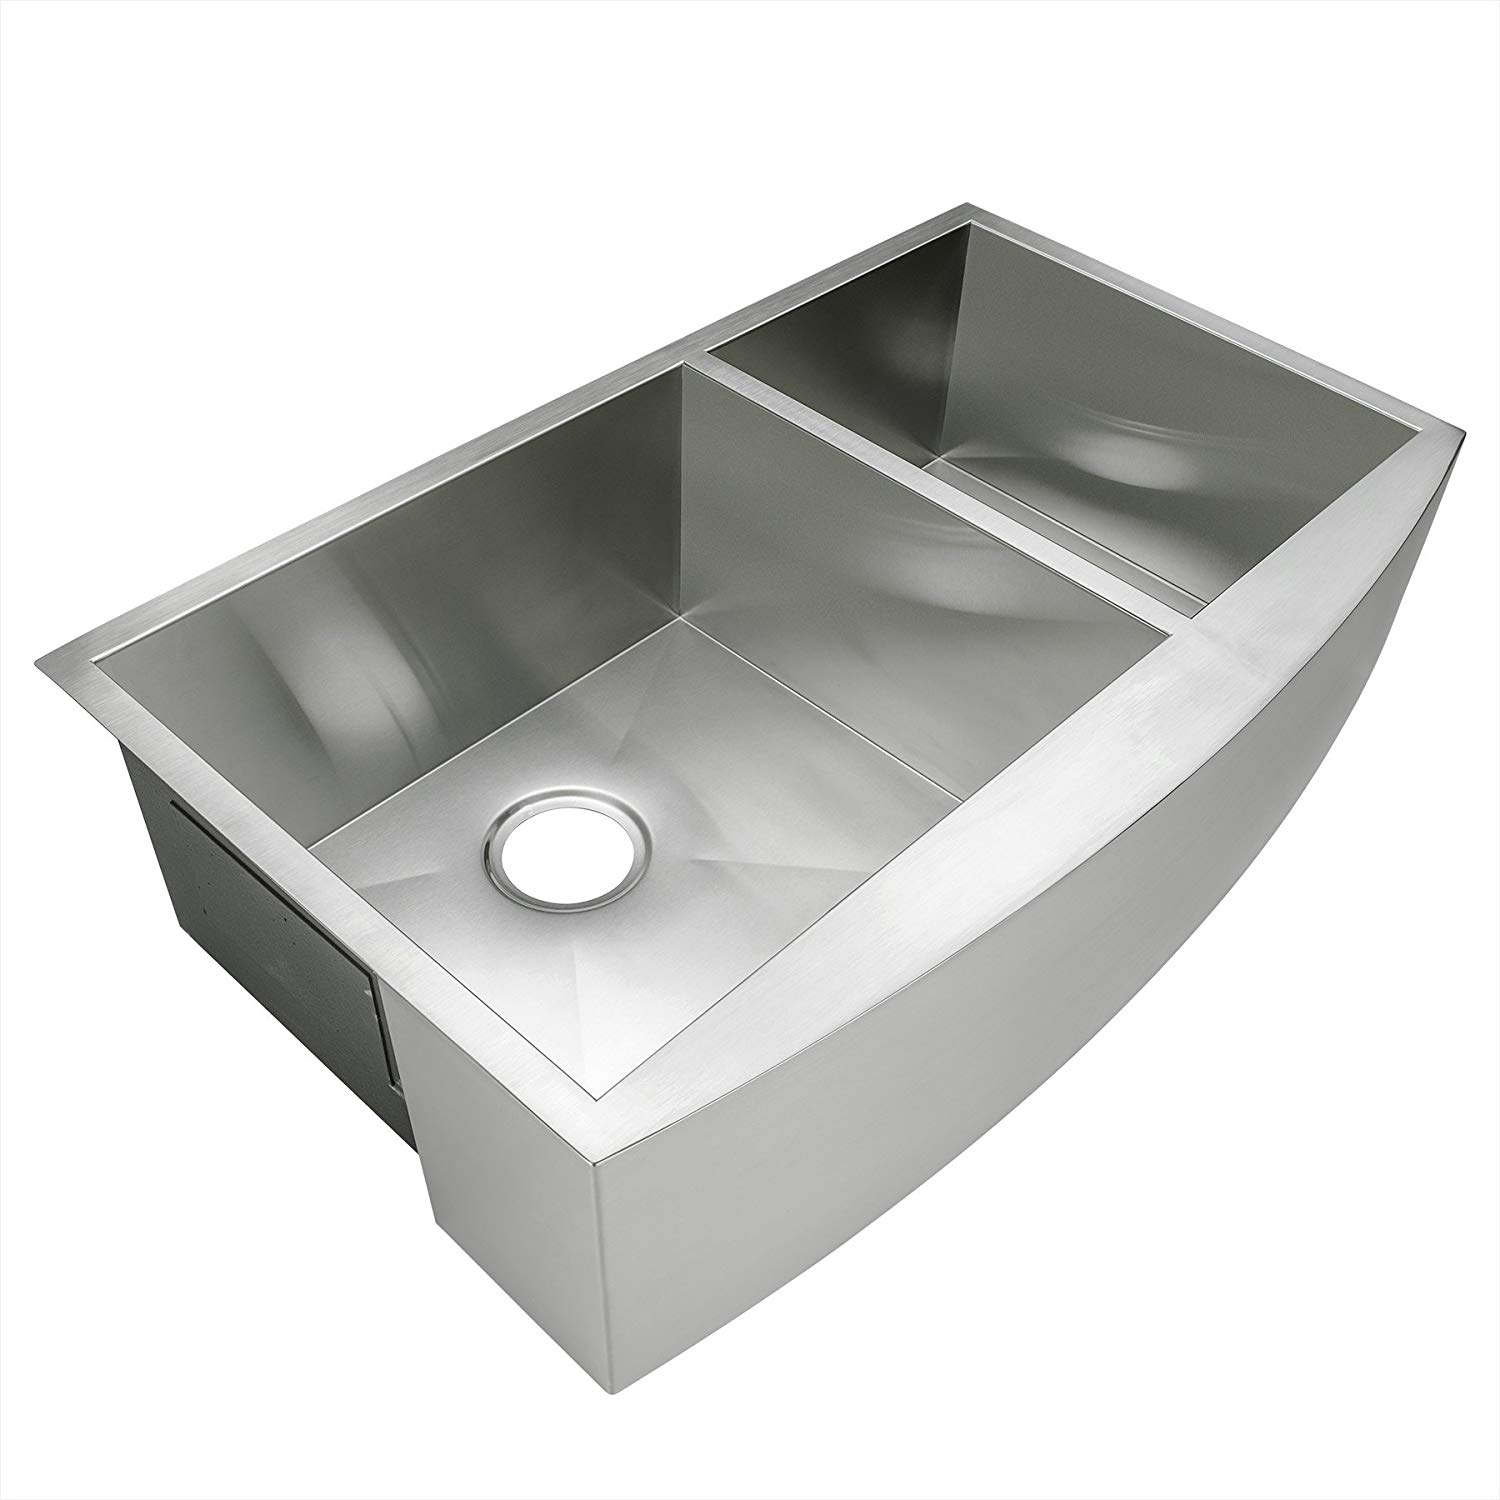 Stainless Steel Handmade Farmhouse Silvery White Double Bowl Kitchen Sink